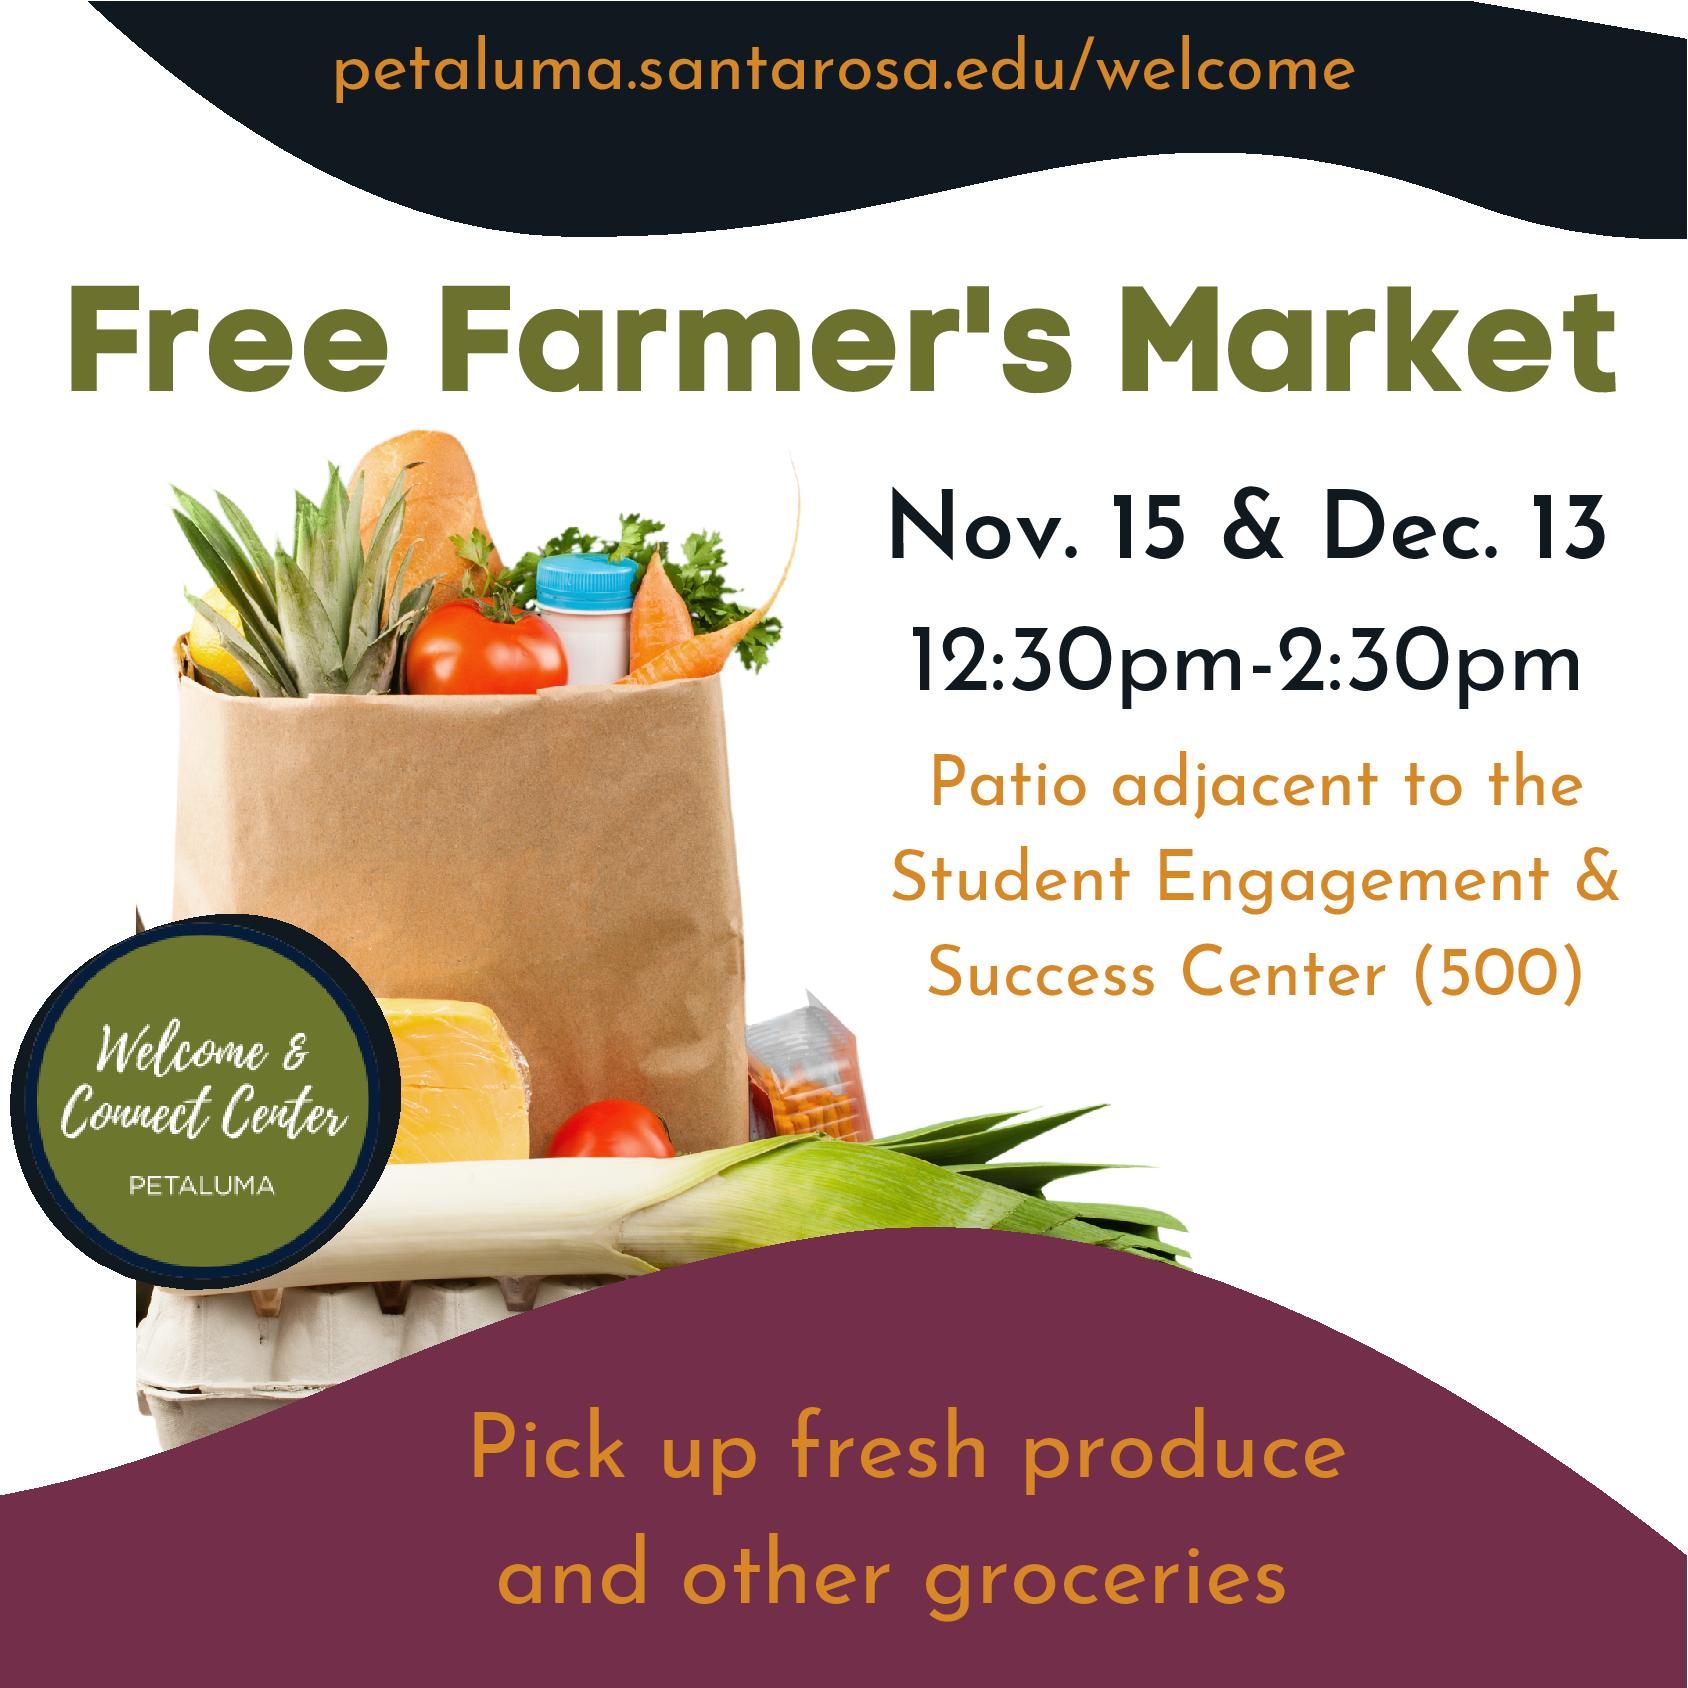 Free Farmer's Market Nov. 15 & Dec. 13 12:30pm-2:30pm Pick up fresh produce and other groceries petaluma.santarosa.edu/welcome Patio adjacent to the Student Engagement & Success Center (500)